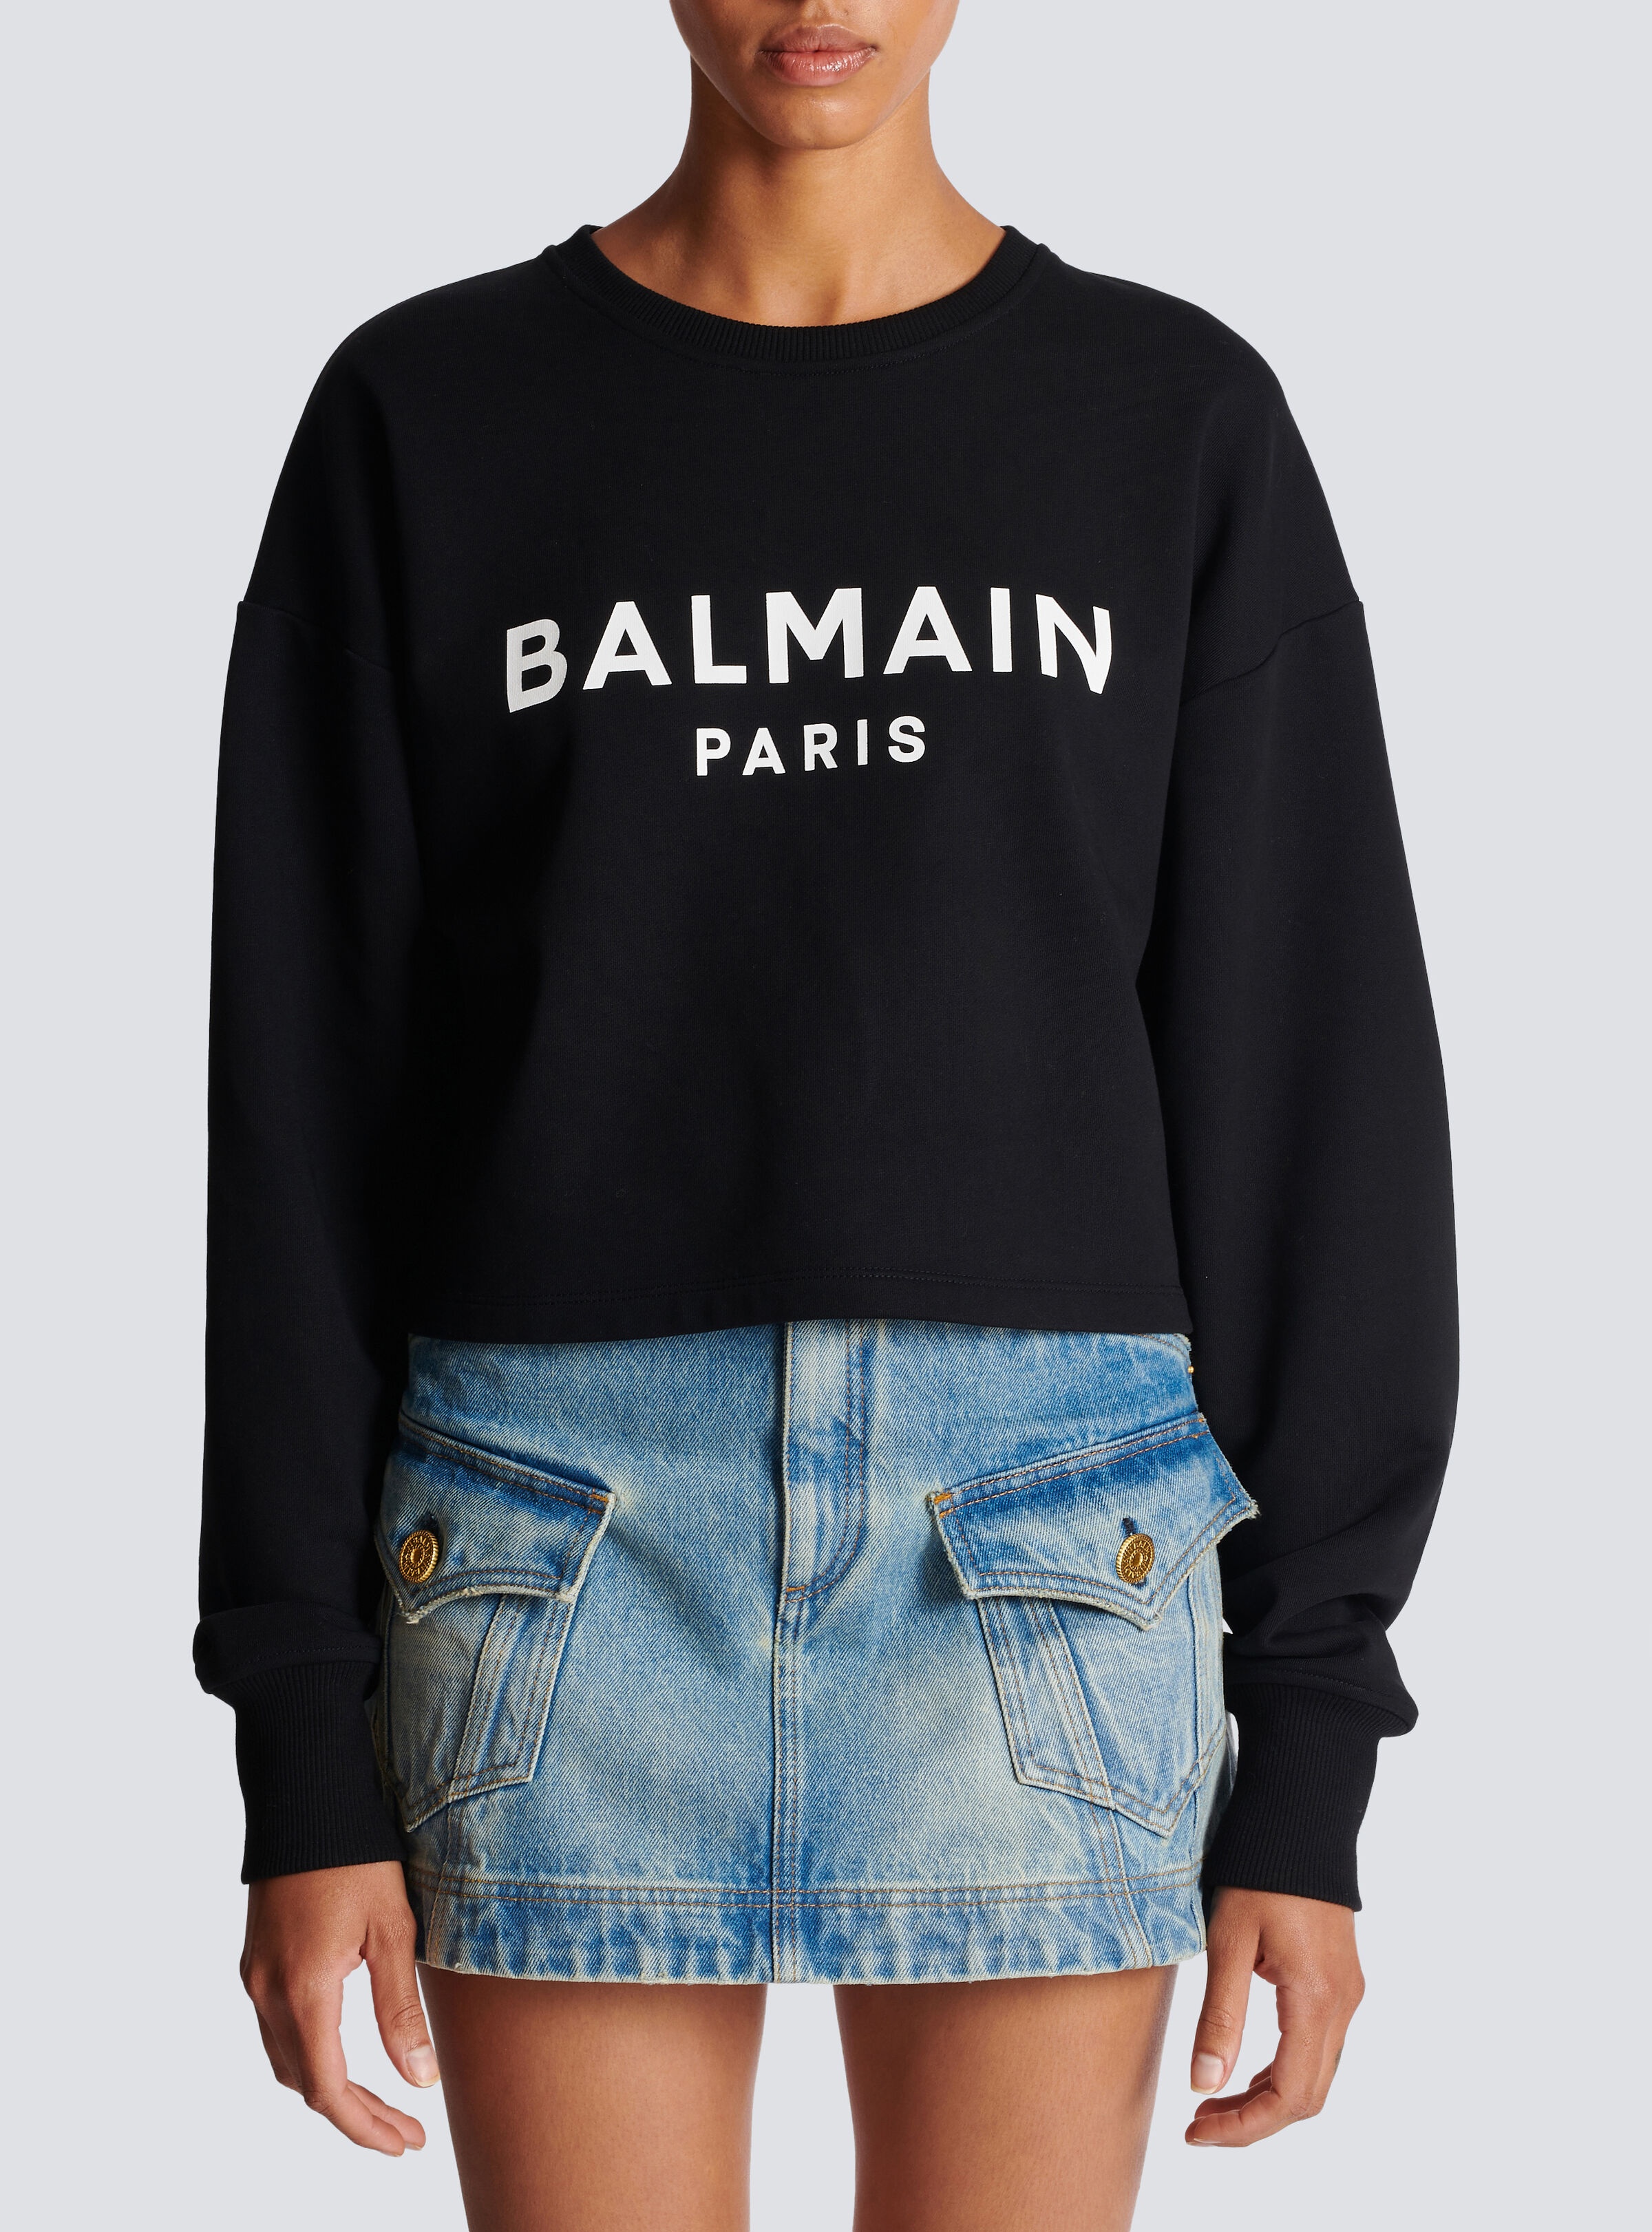 Balmain Paris sweatshirt - 5